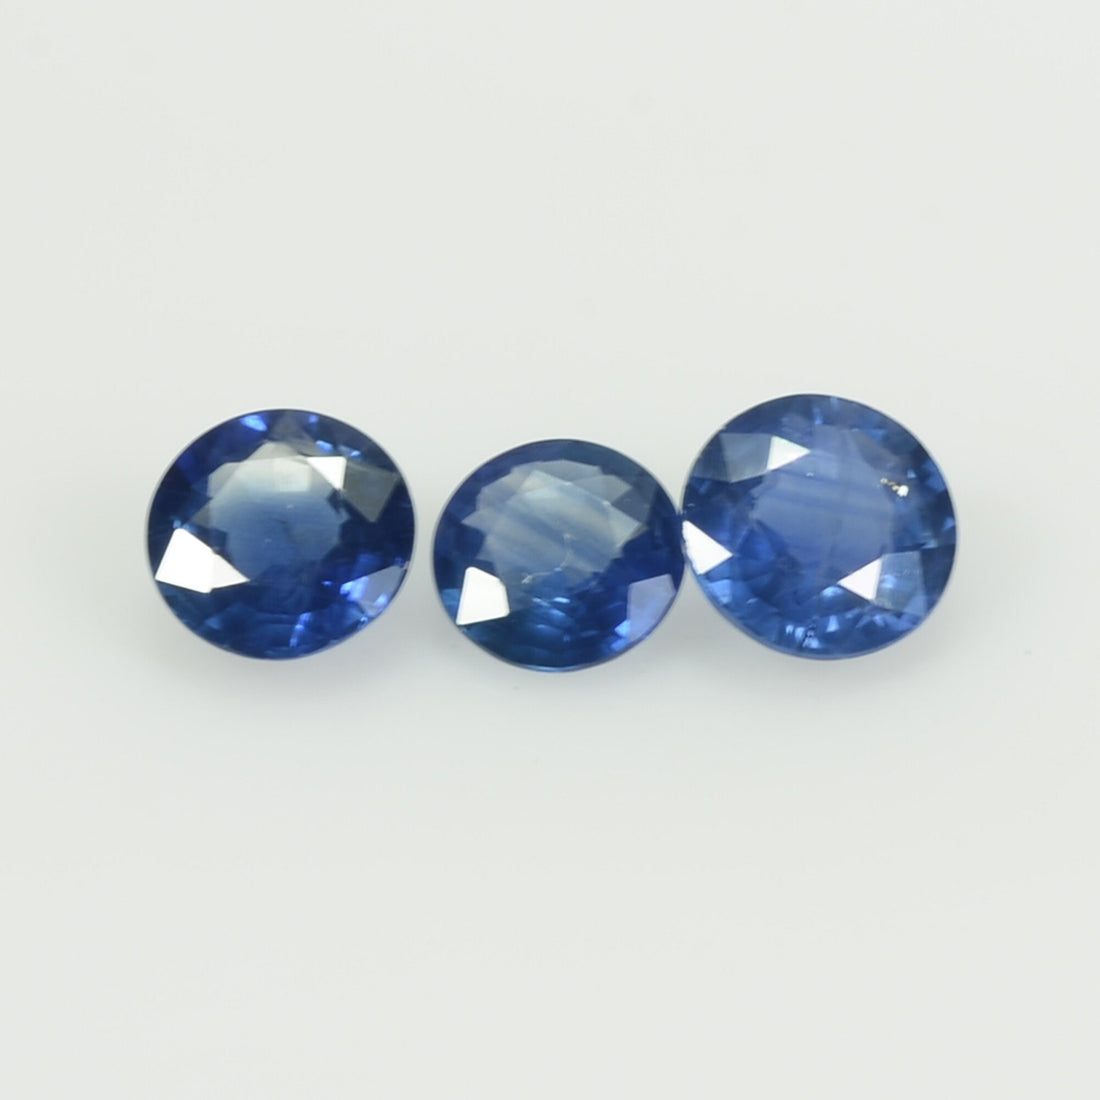 5.1-6.0 MM Natural Blue Sapphire Loose Gemstone Round Cut